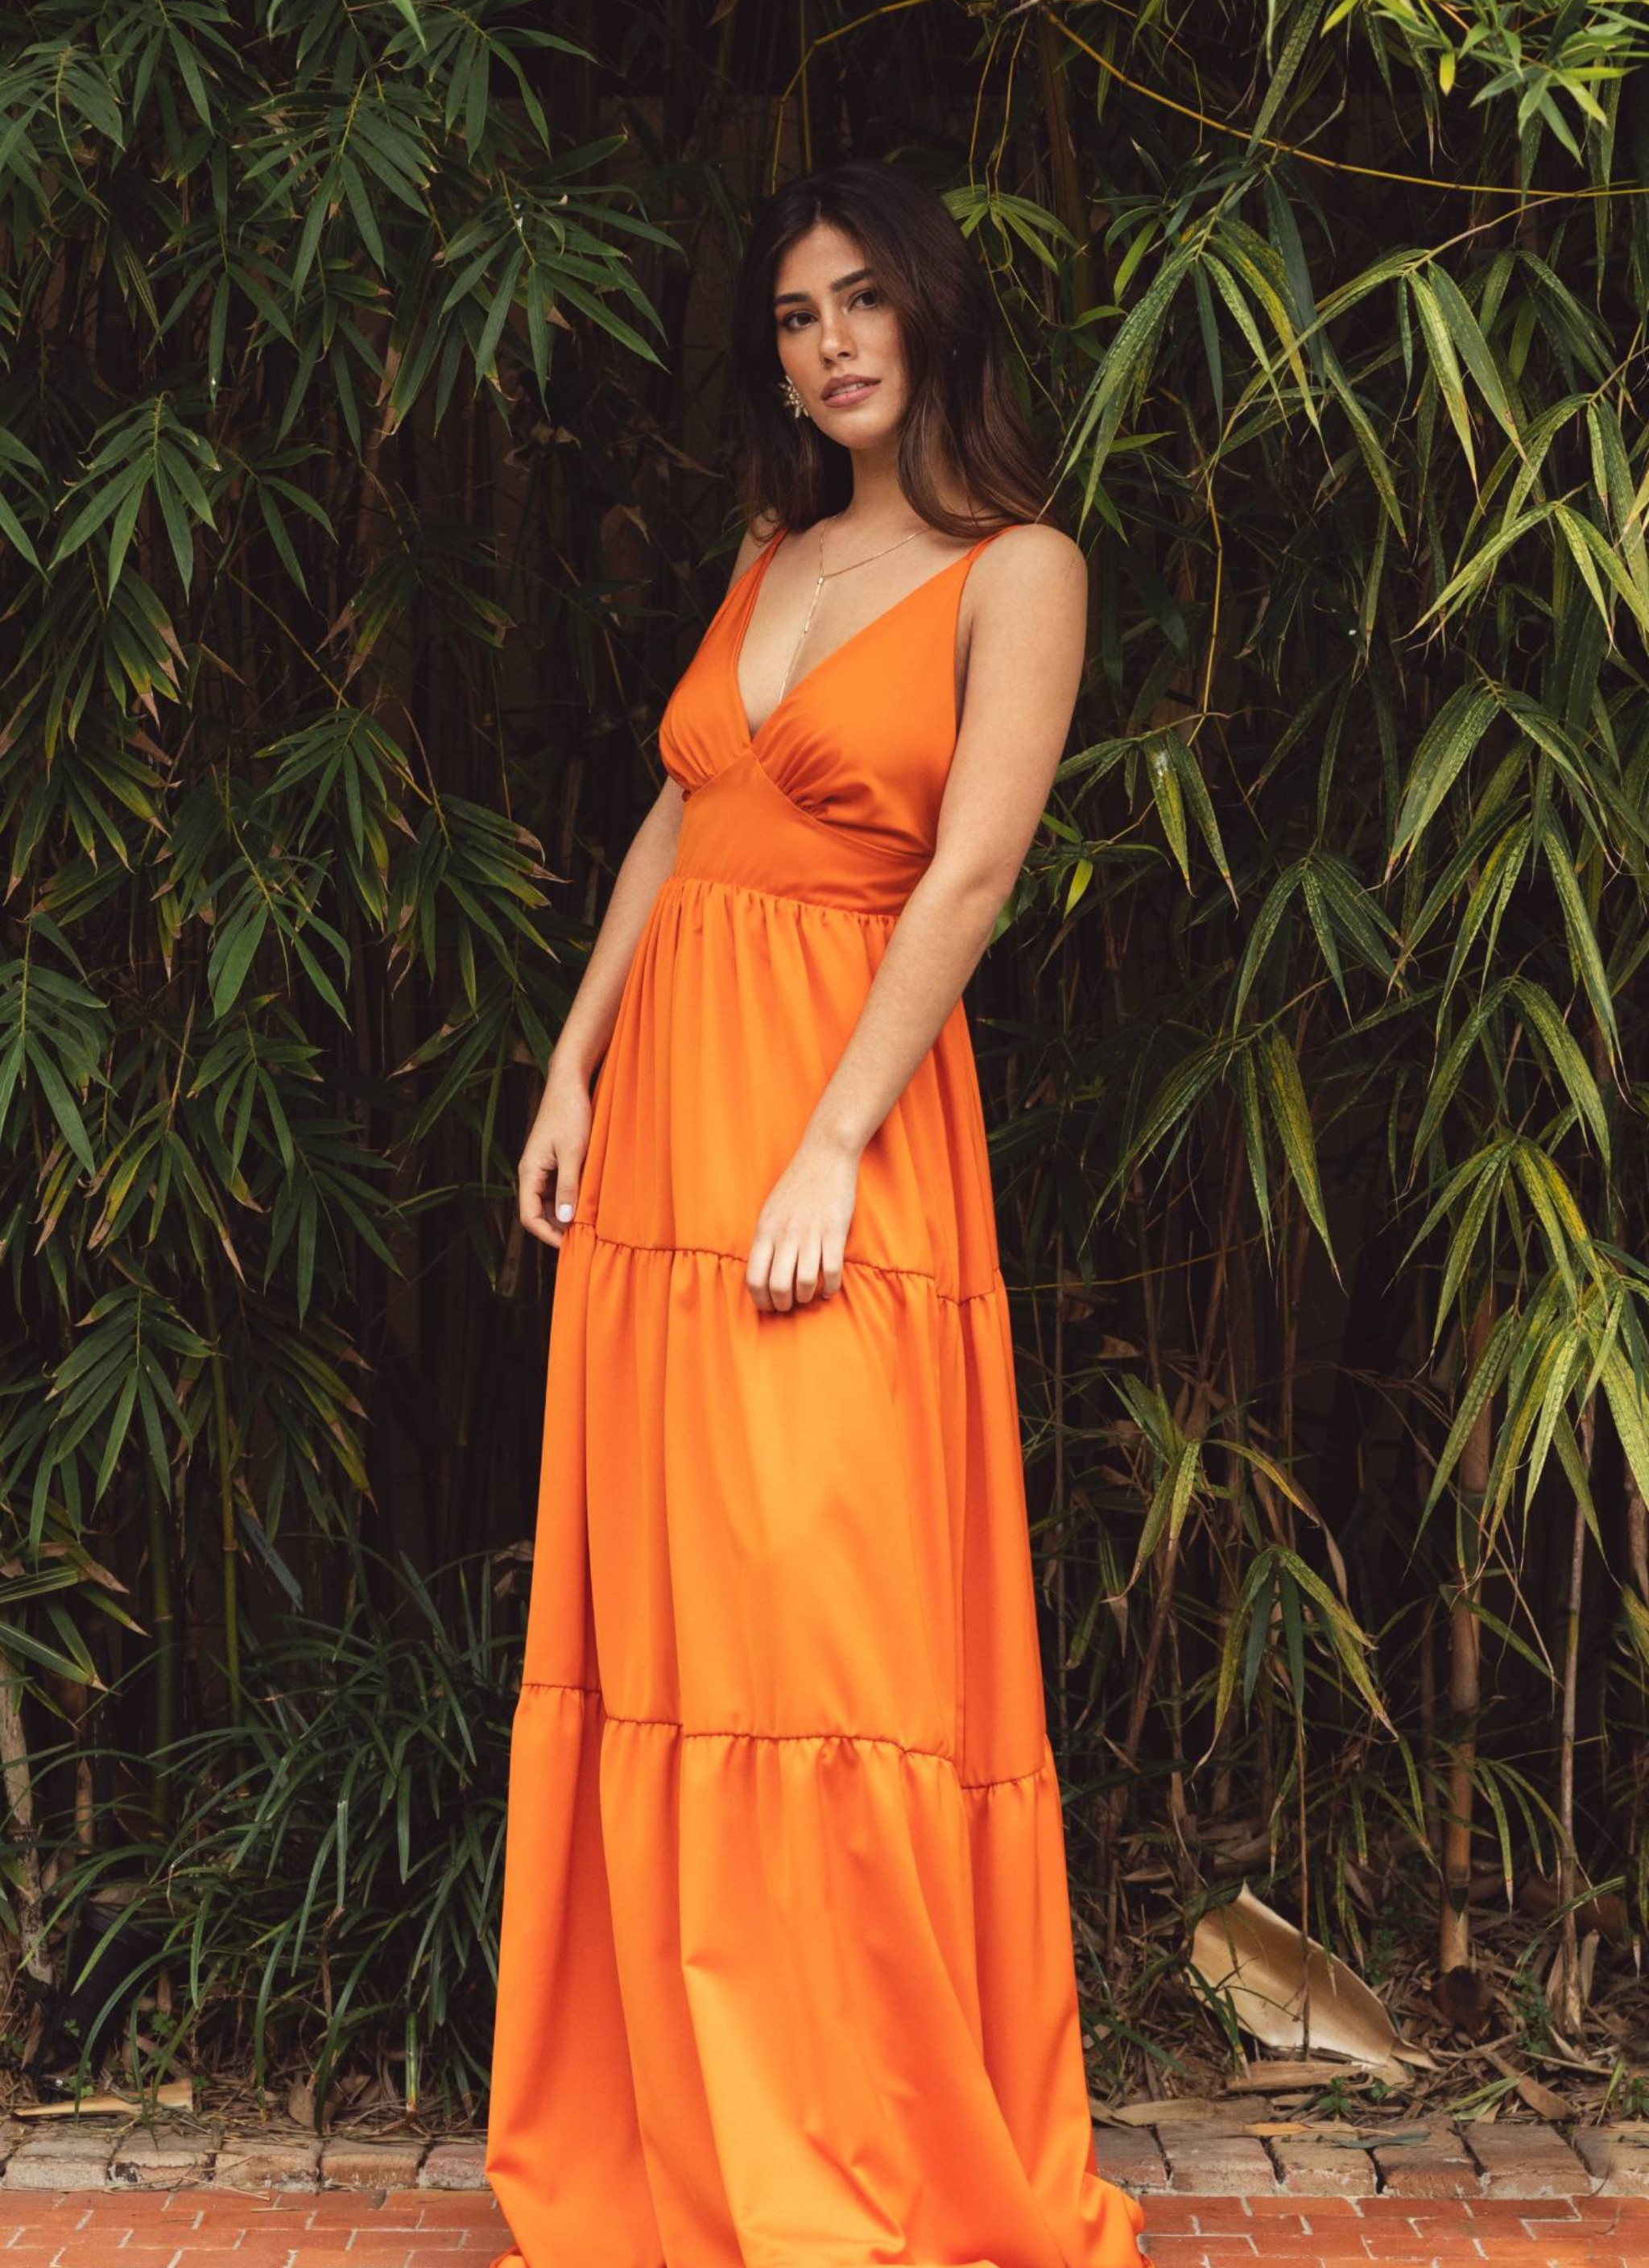 Look: Pleated Orange - Super Vaidosa | Orange dress outfits, Orange dress,  Self portrait dress